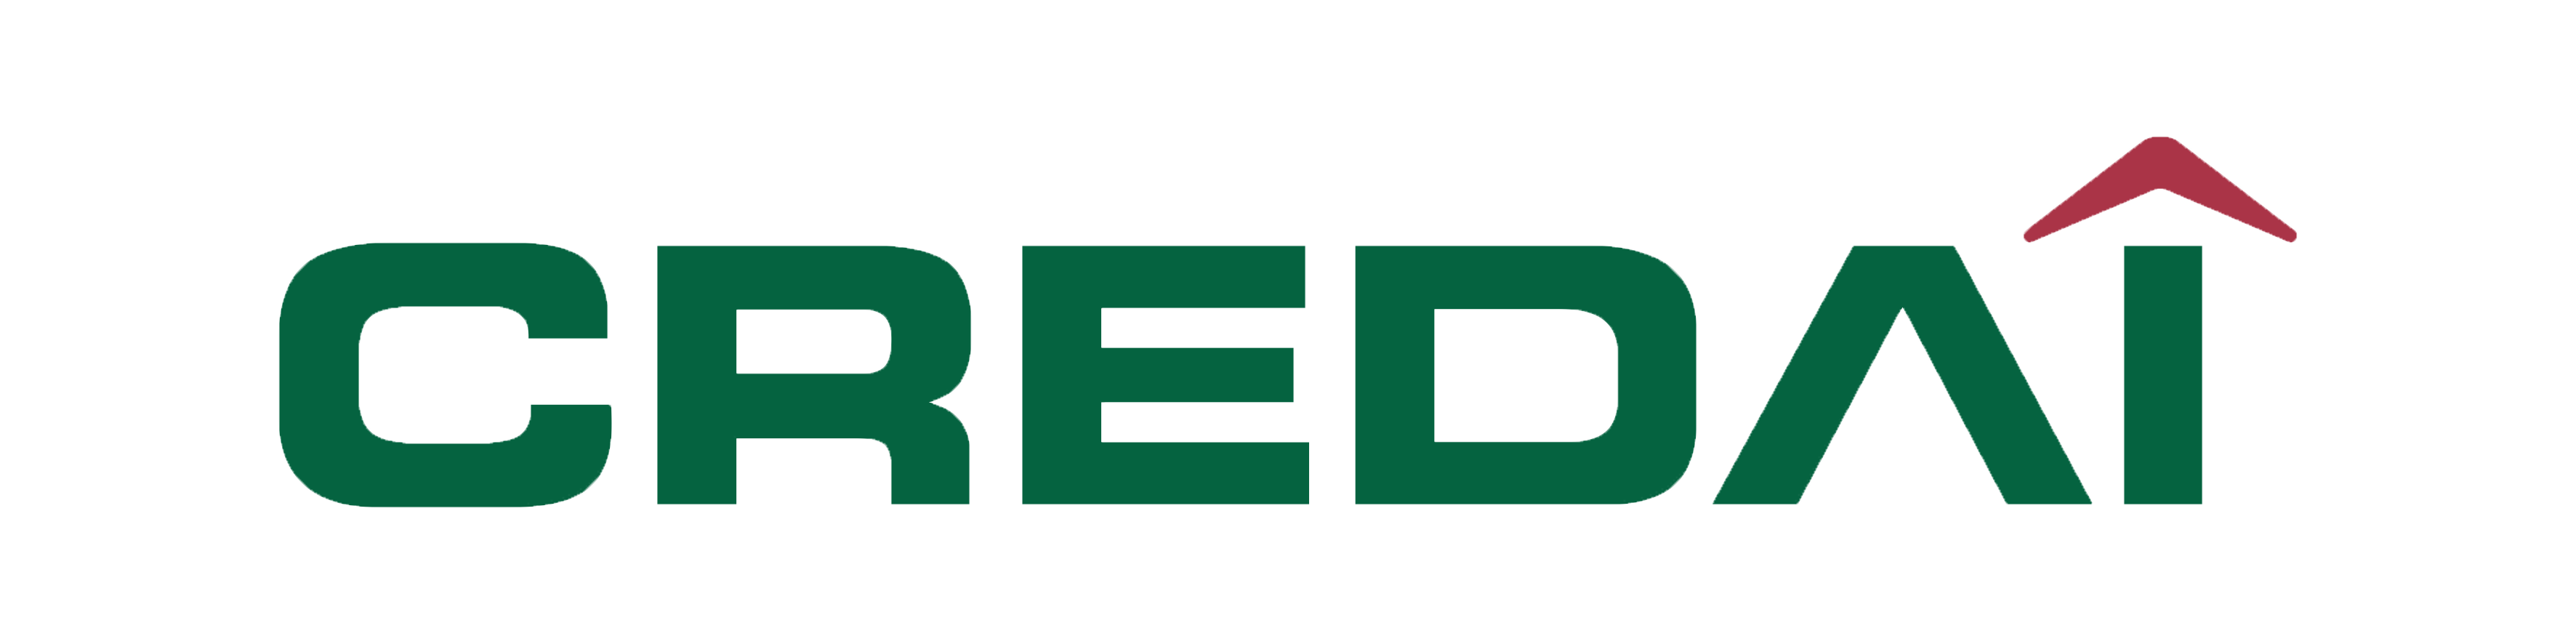 Member Credai logo